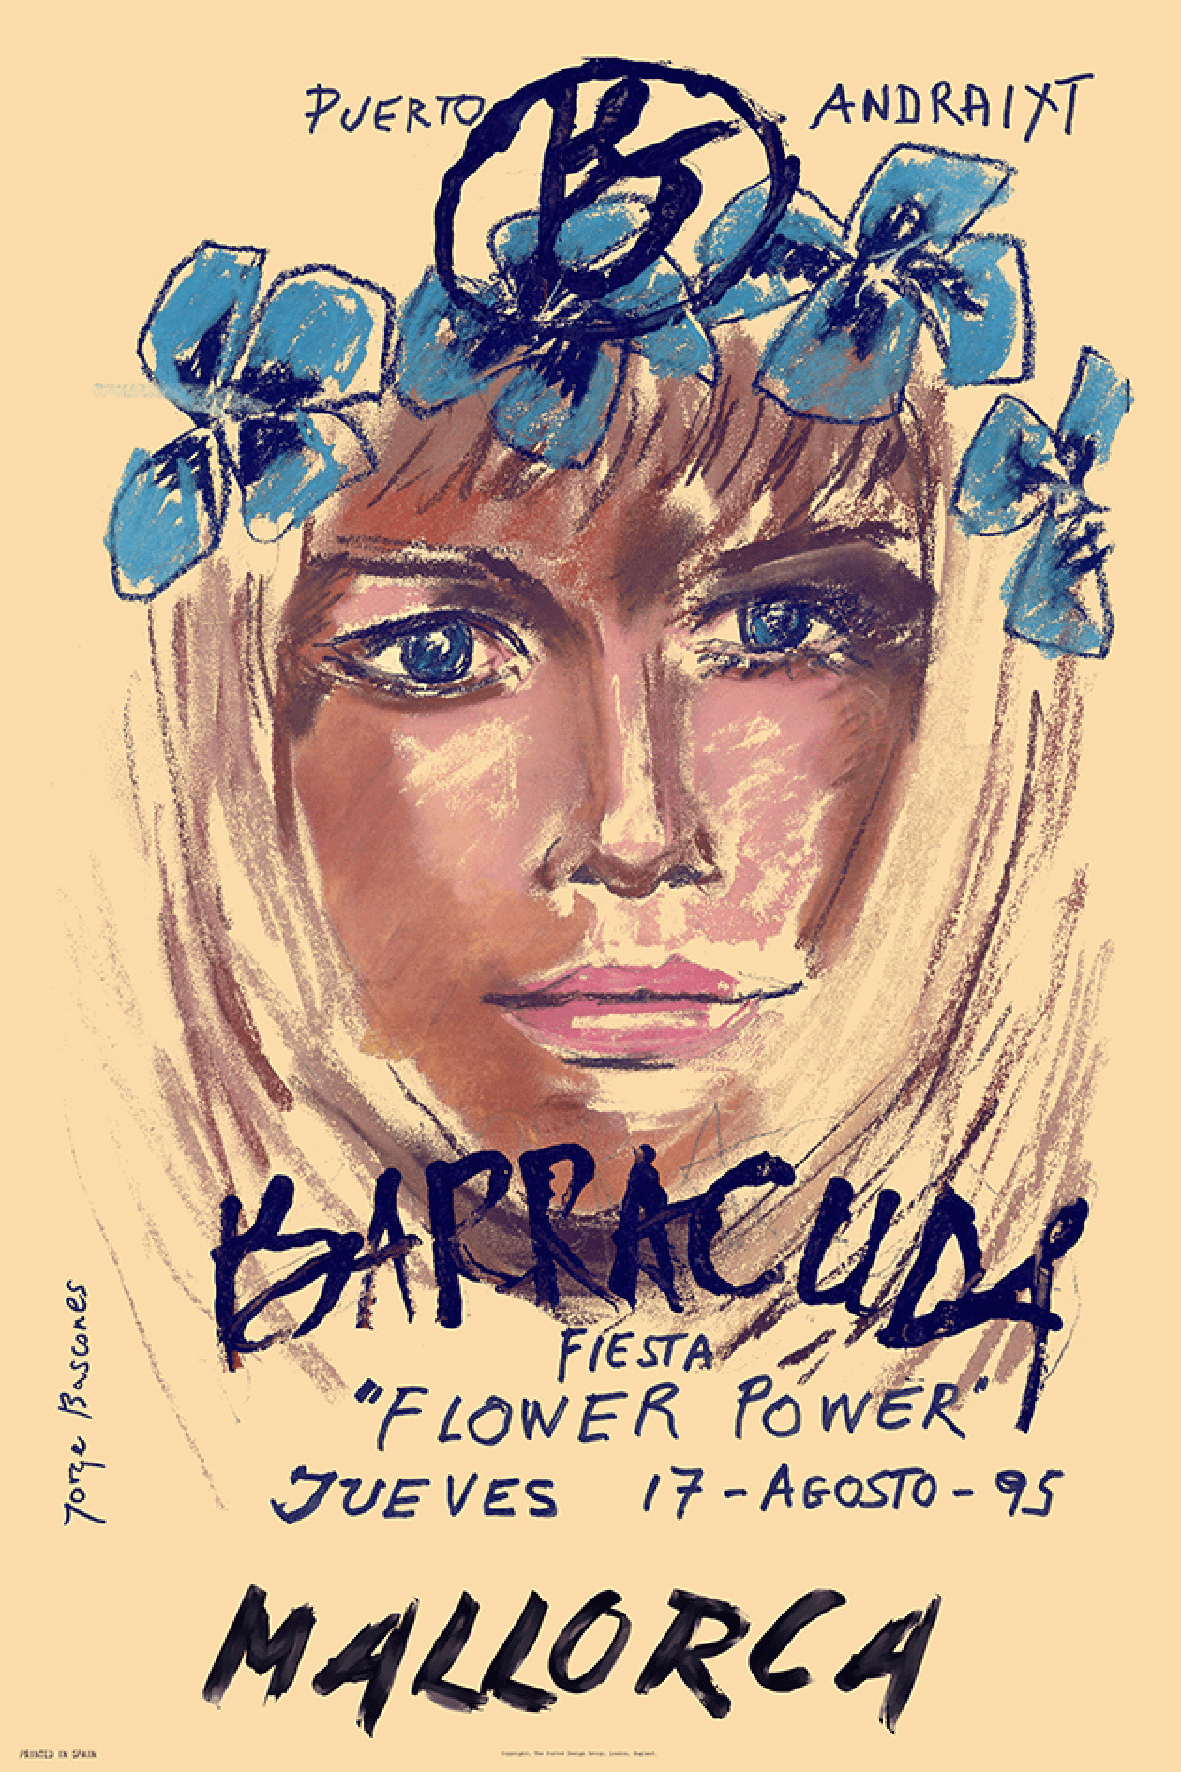 Barracuda, Fiesta "Flower Power", Mallorca.